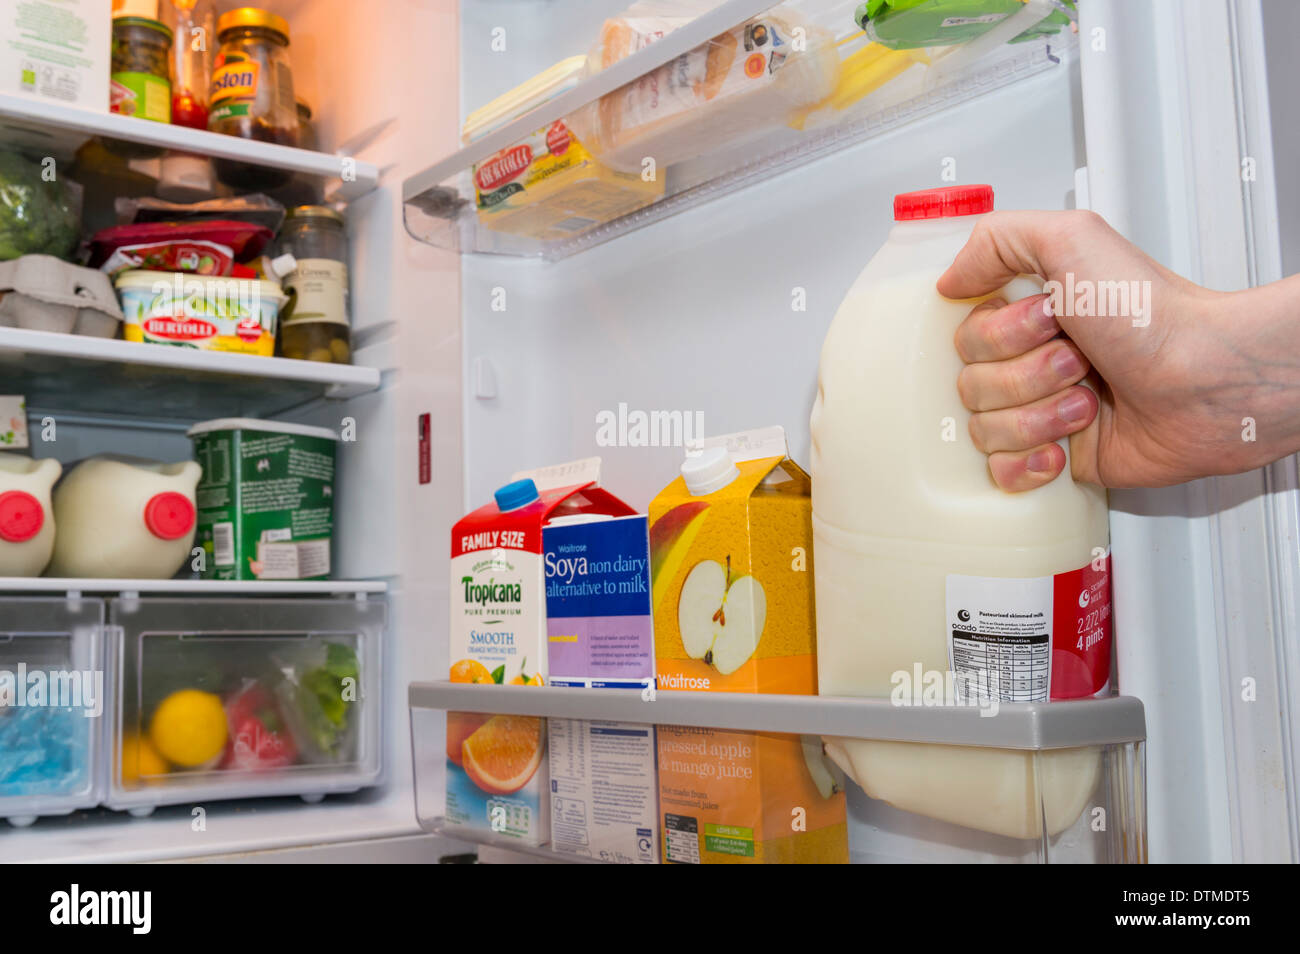 https://c8.alamy.com/comp/DTMDT5/a-hand-pulling-out-a-plastic-bottle-of-milk-from-a-well-stocked-fridge-DTMDT5.jpg